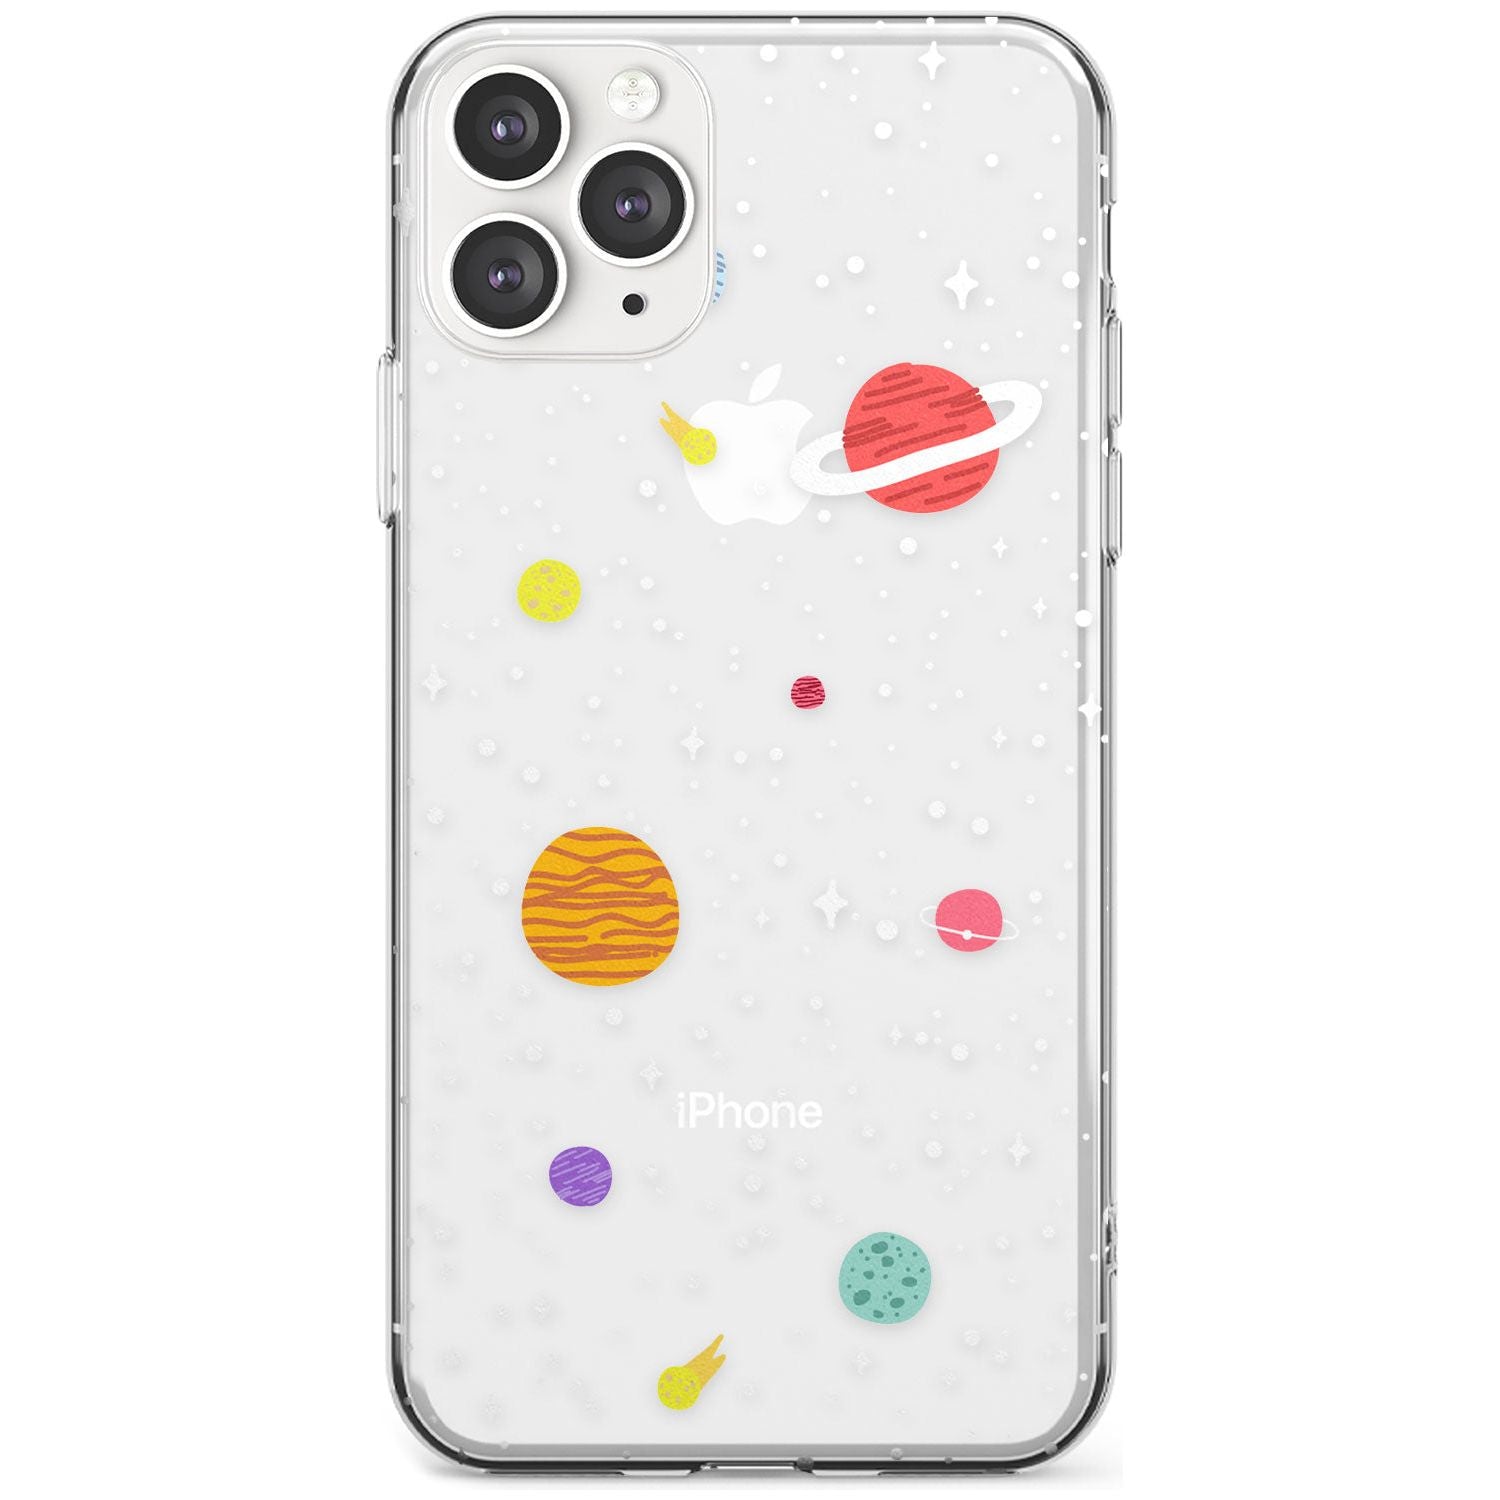 Cute Cartoon Planets (Clear) Slim TPU Phone Case for iPhone 11 Pro Max